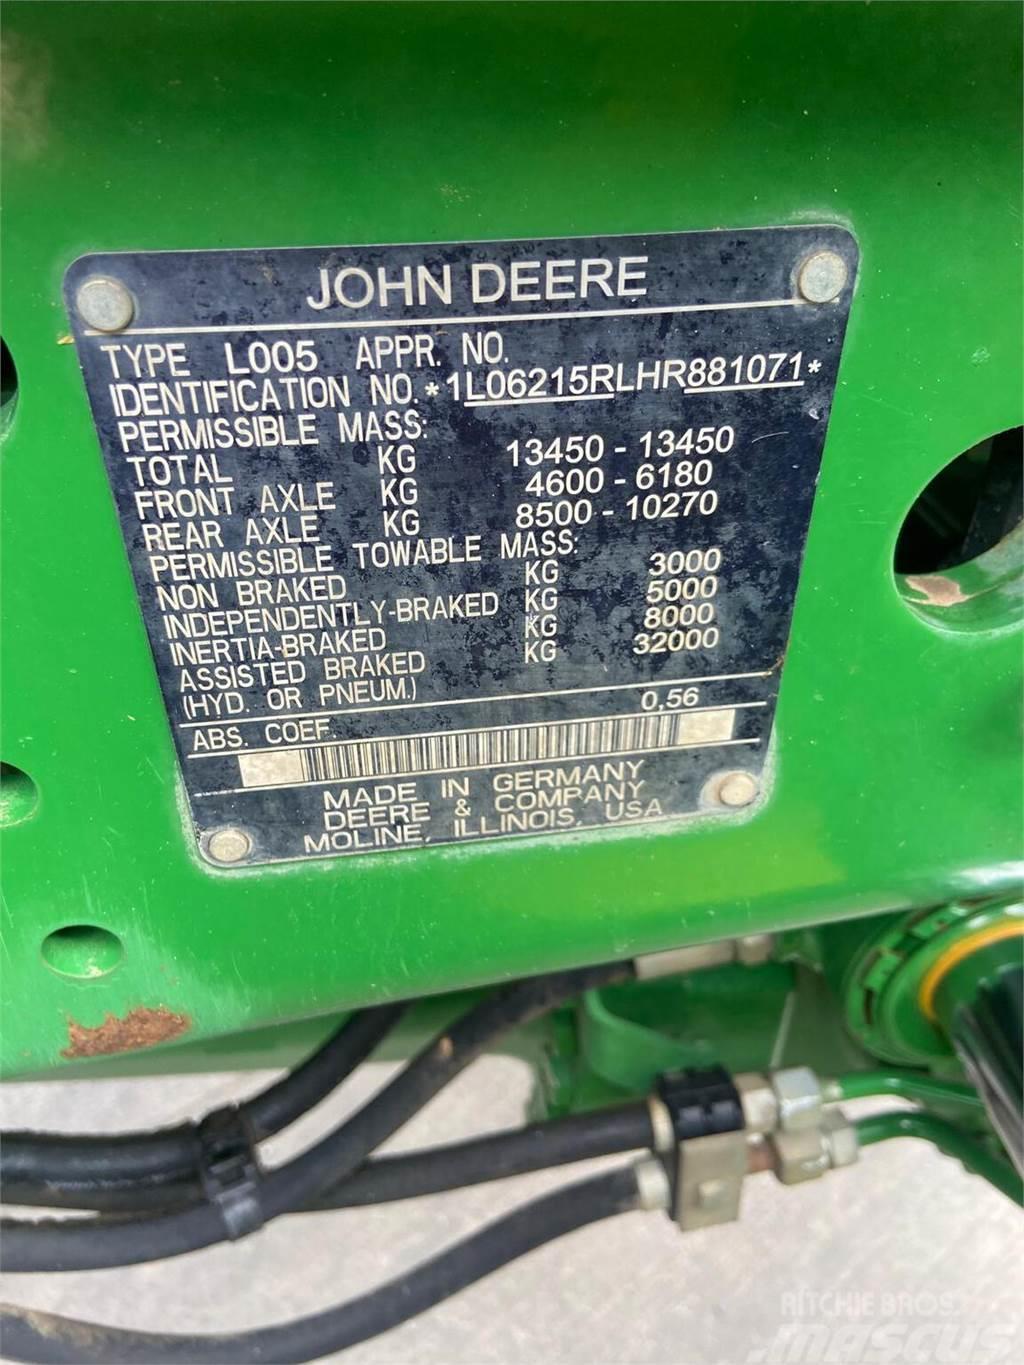 John Deere 6215R Traktorid